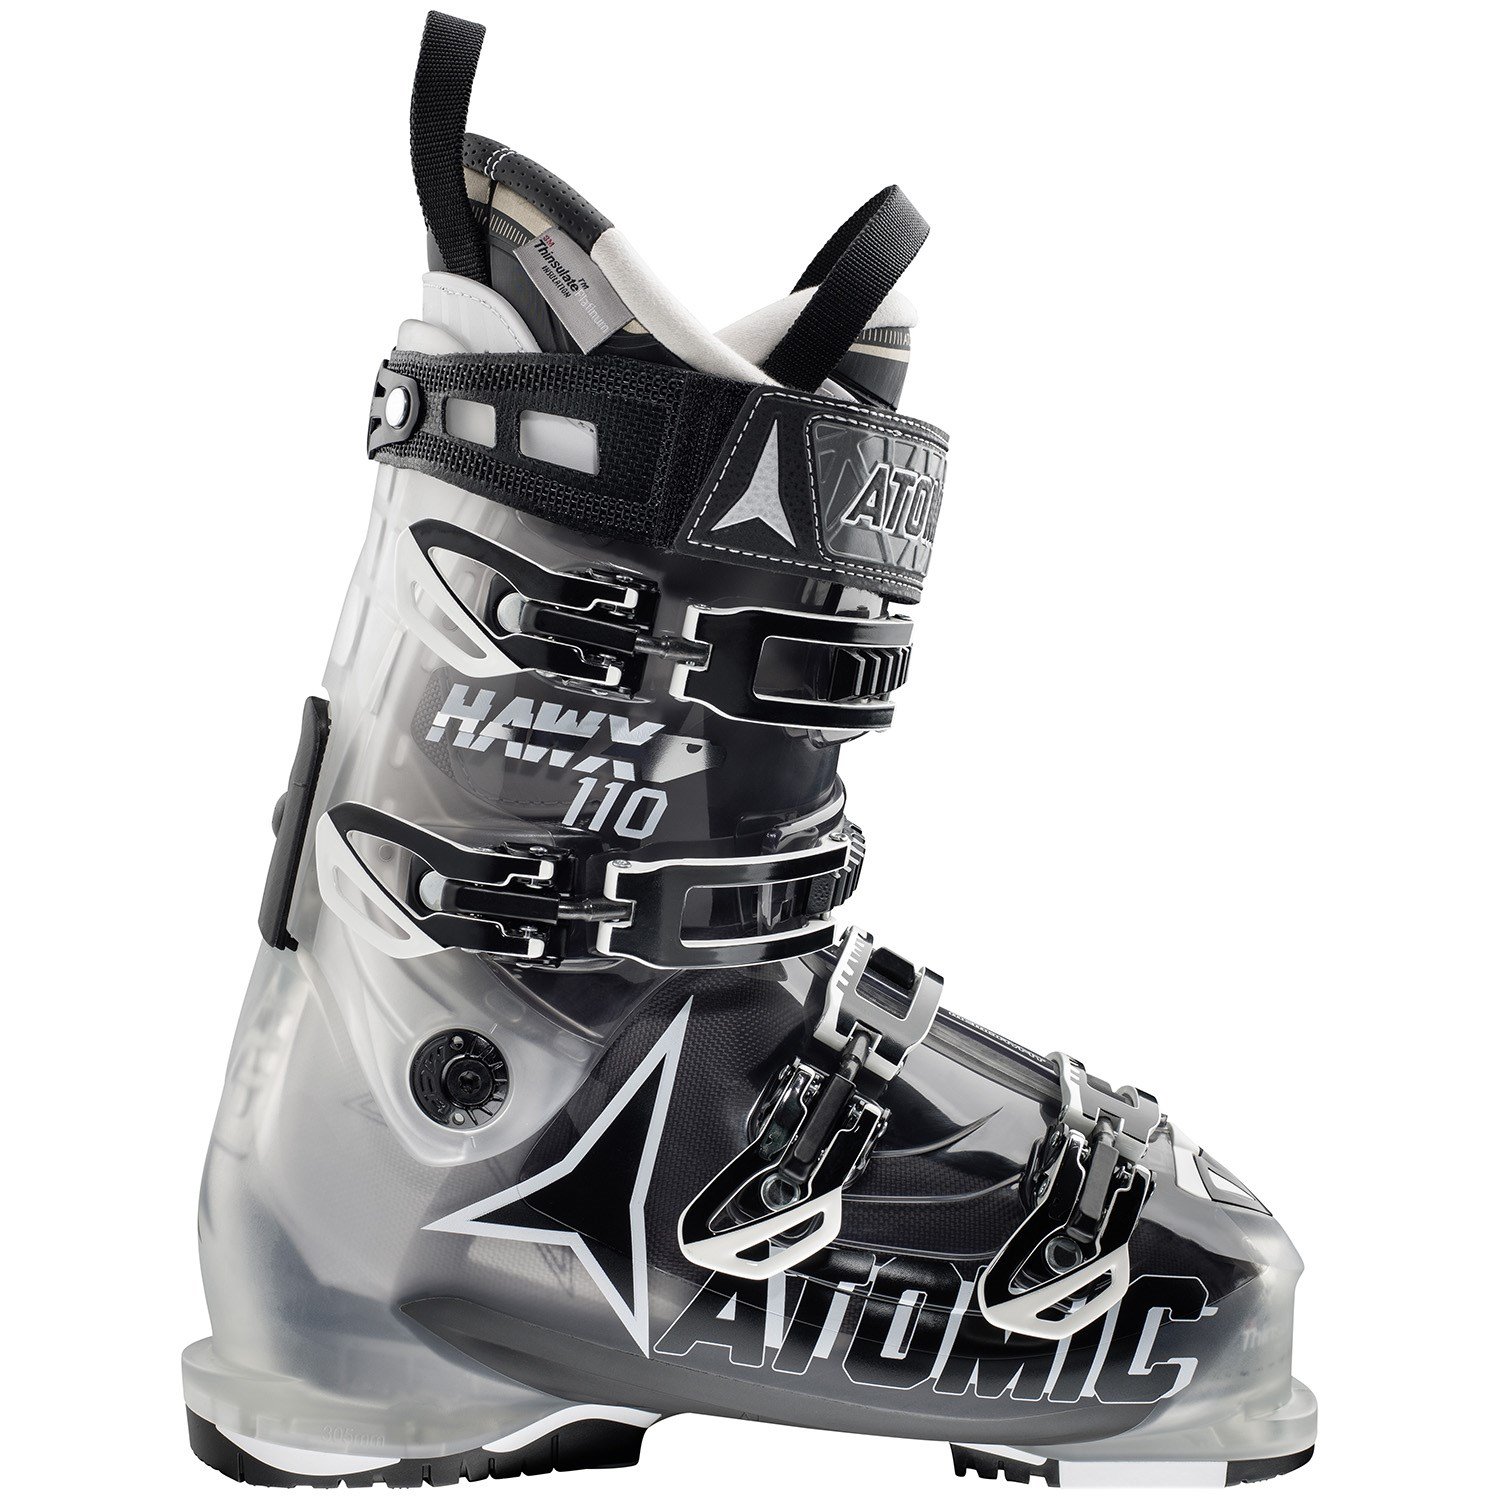 Atomic Hawx 110 Ski Boots 2016 | evo